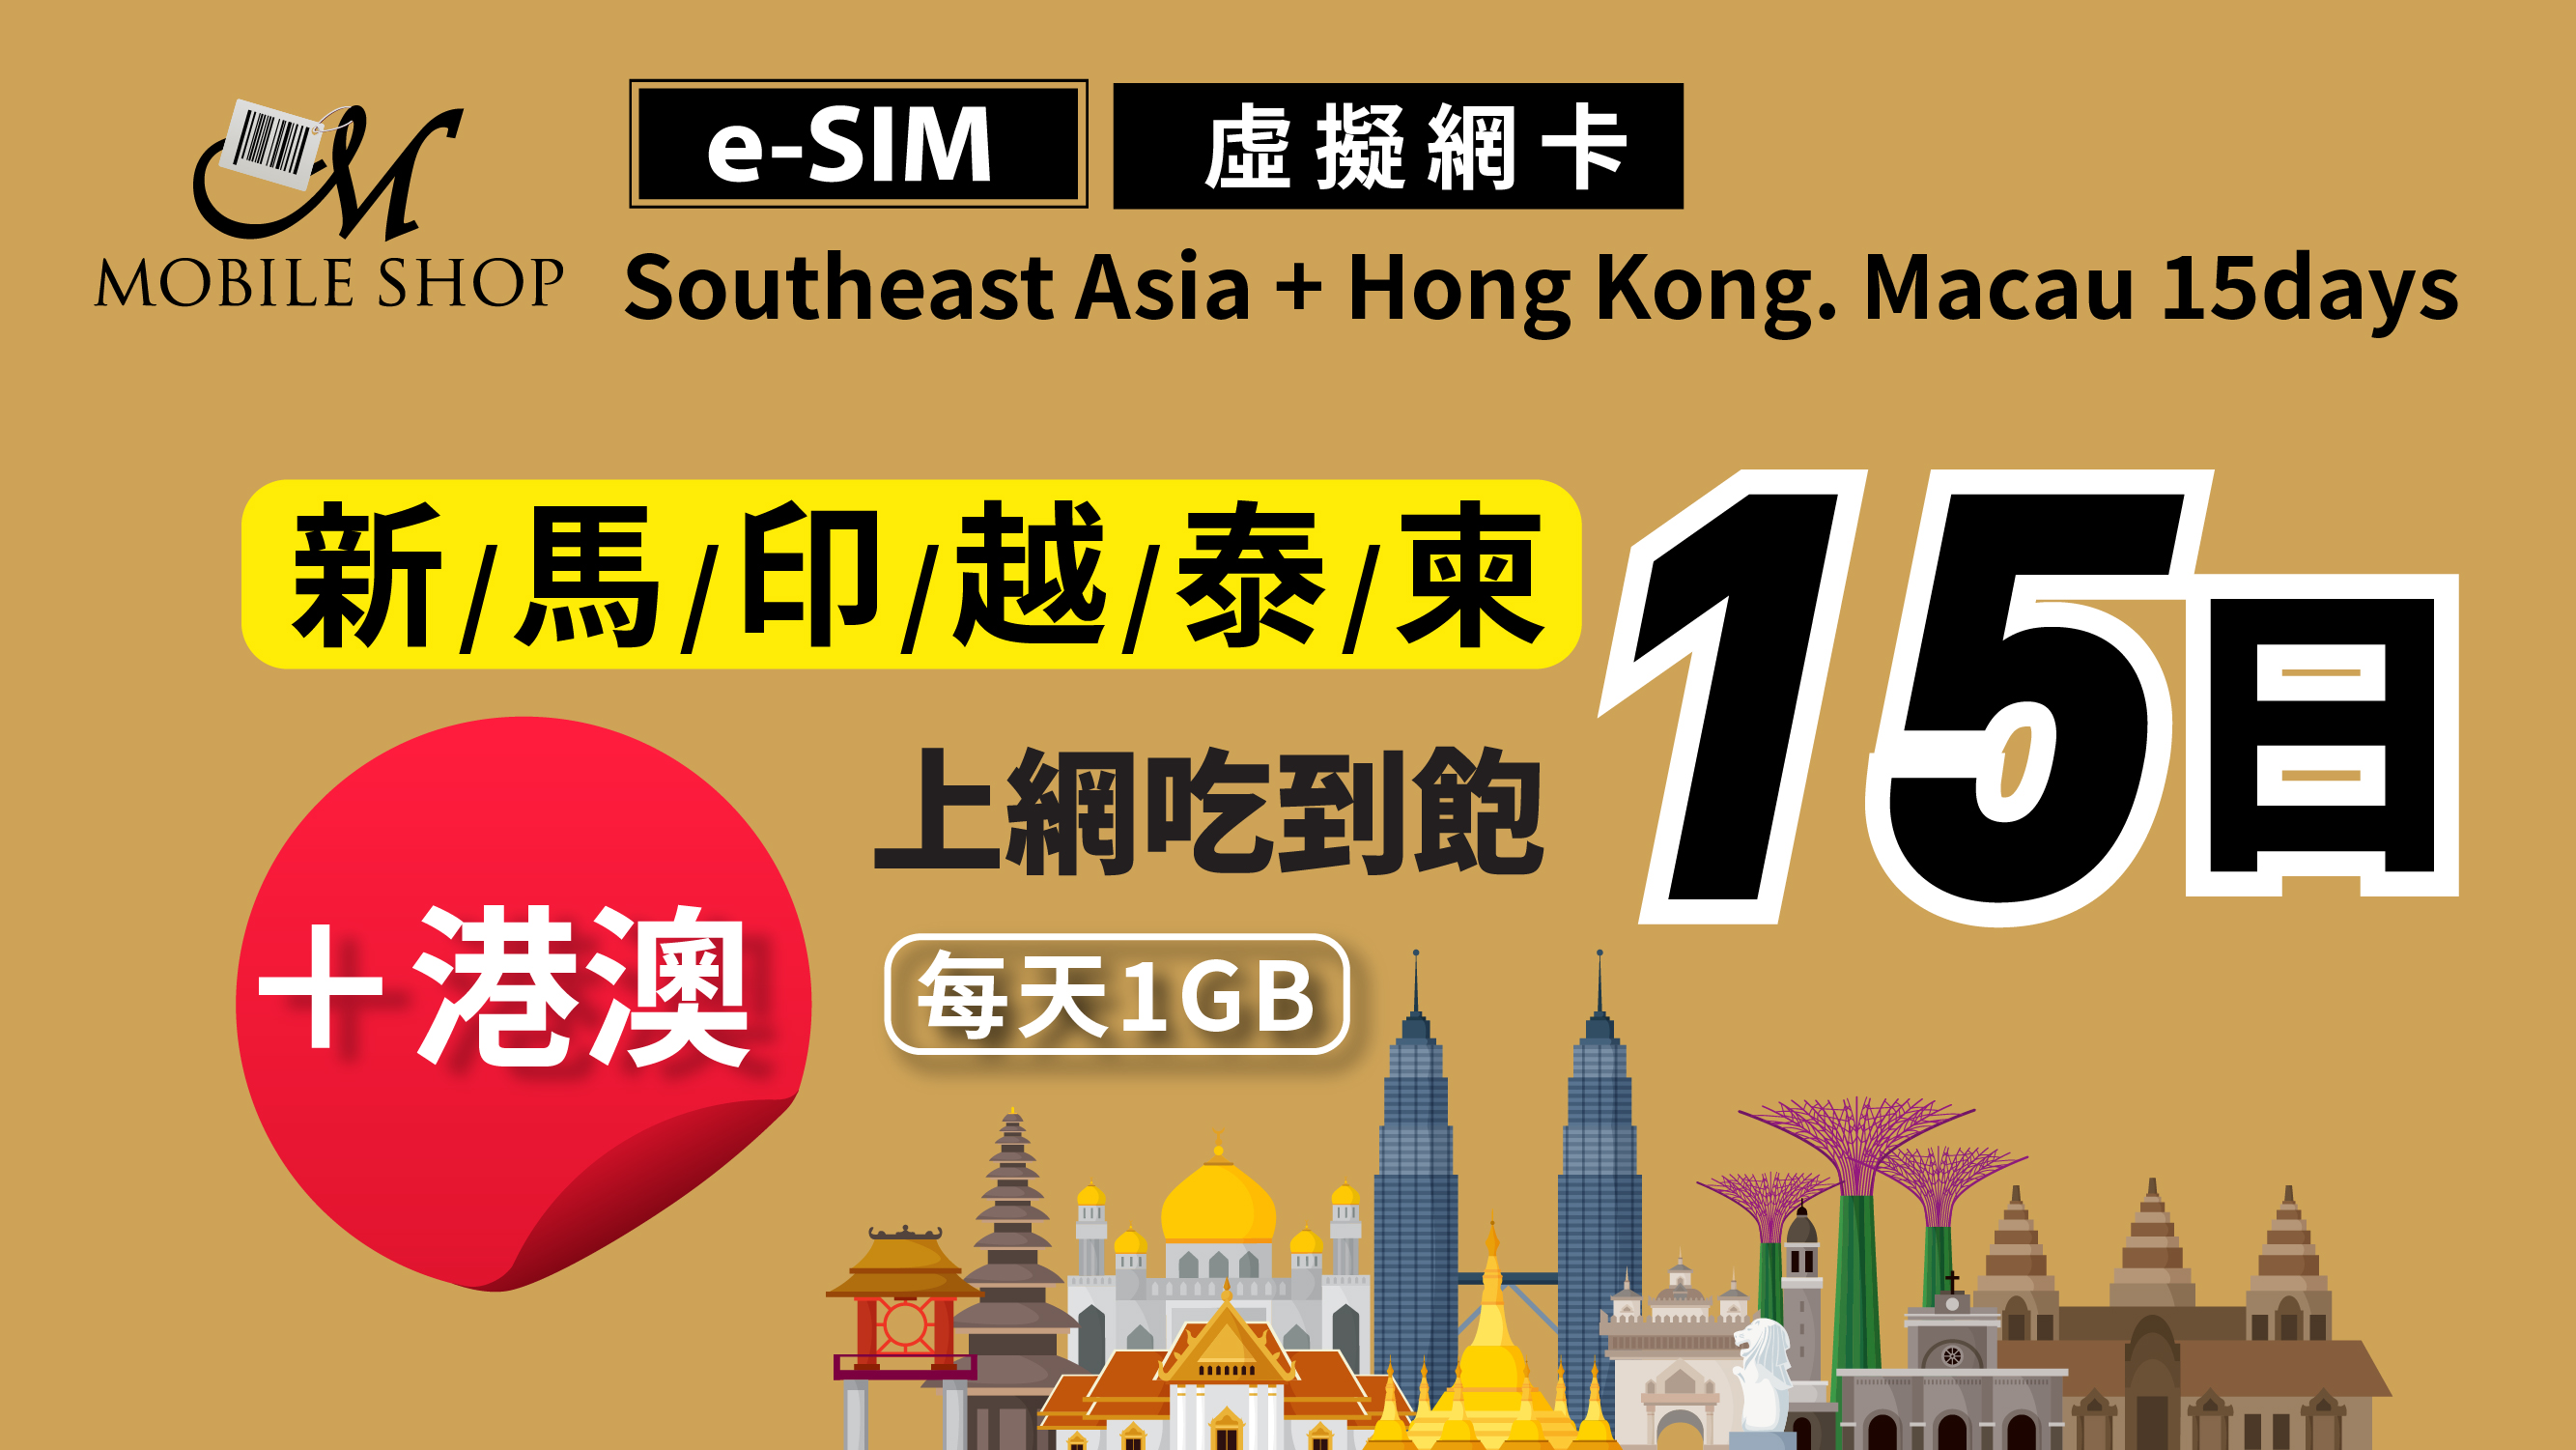 eSIM Southeast Asia+ Hong Kong. Macau 15days/1GB day unlimited data